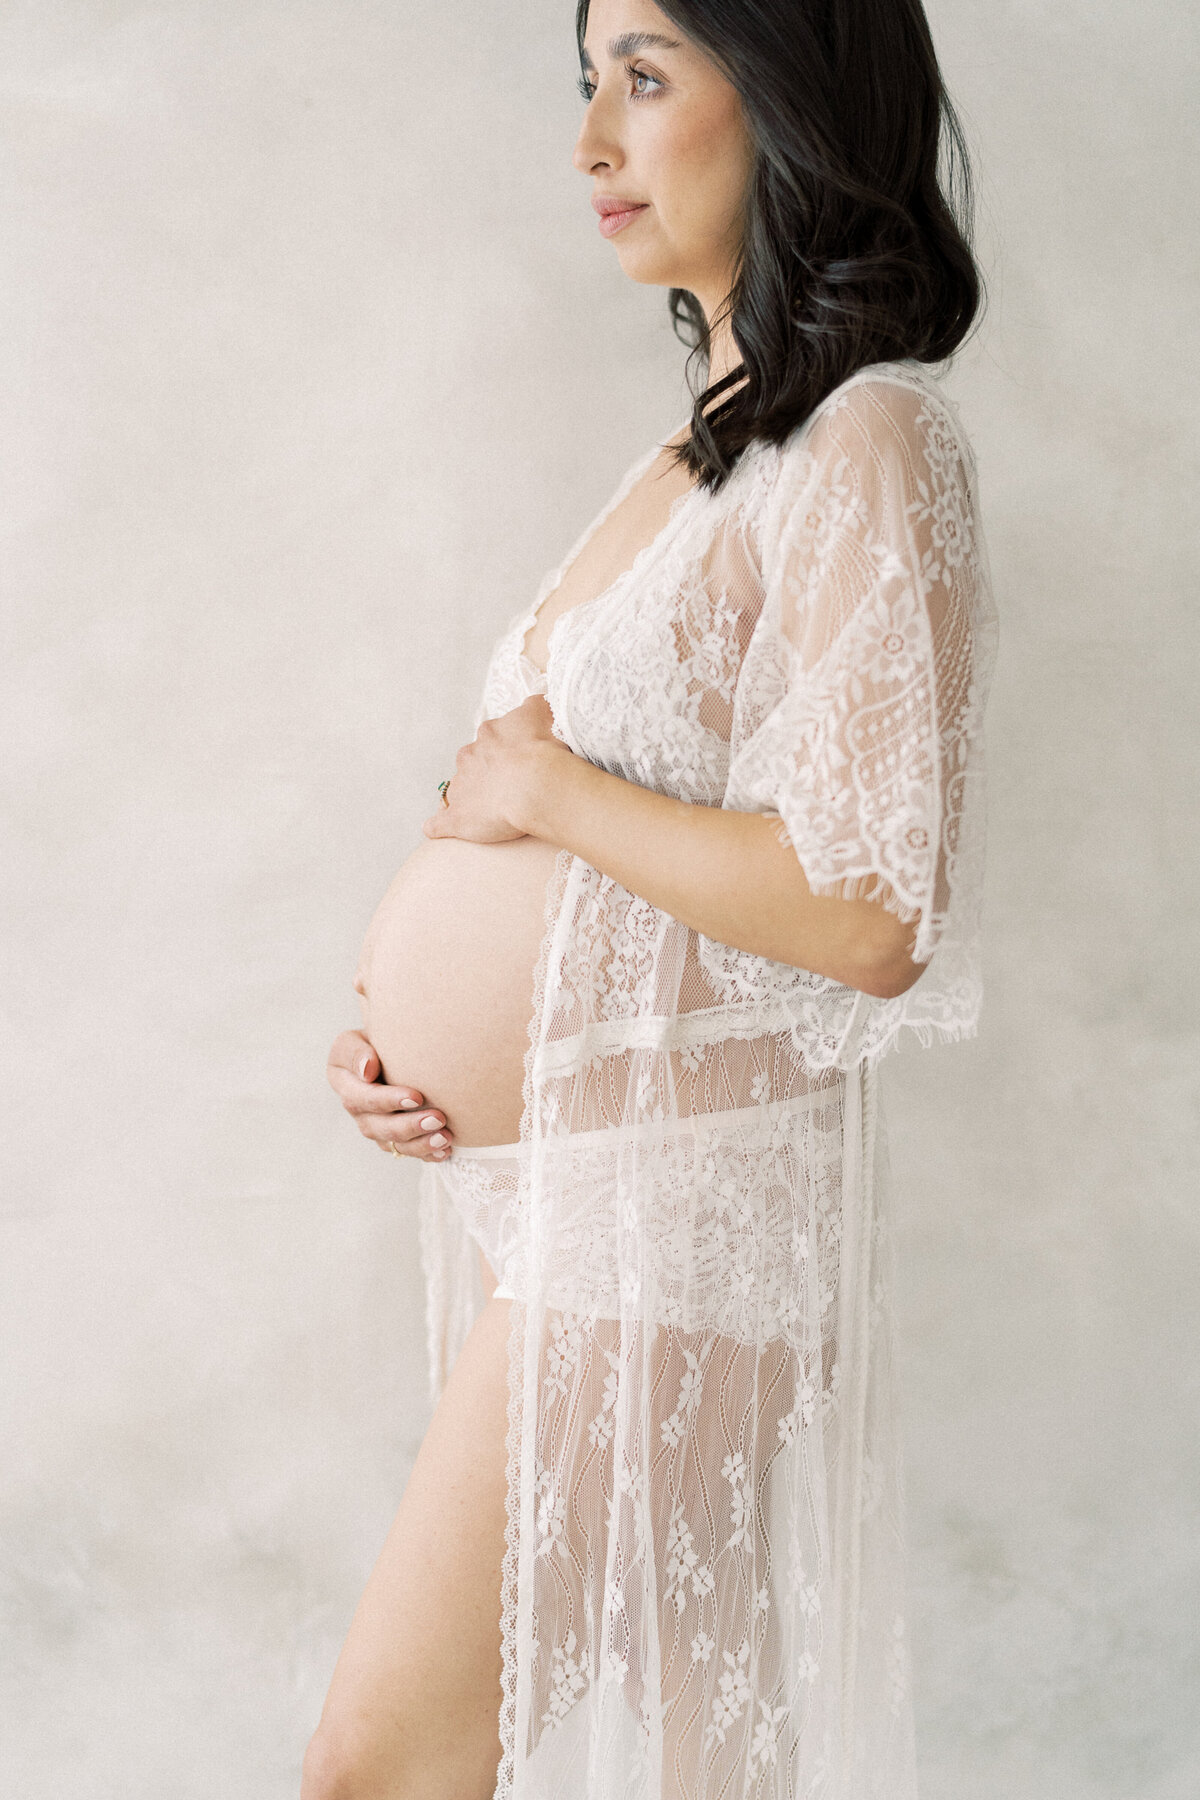 Fresno-Intimate-Maternity-Photographer-3